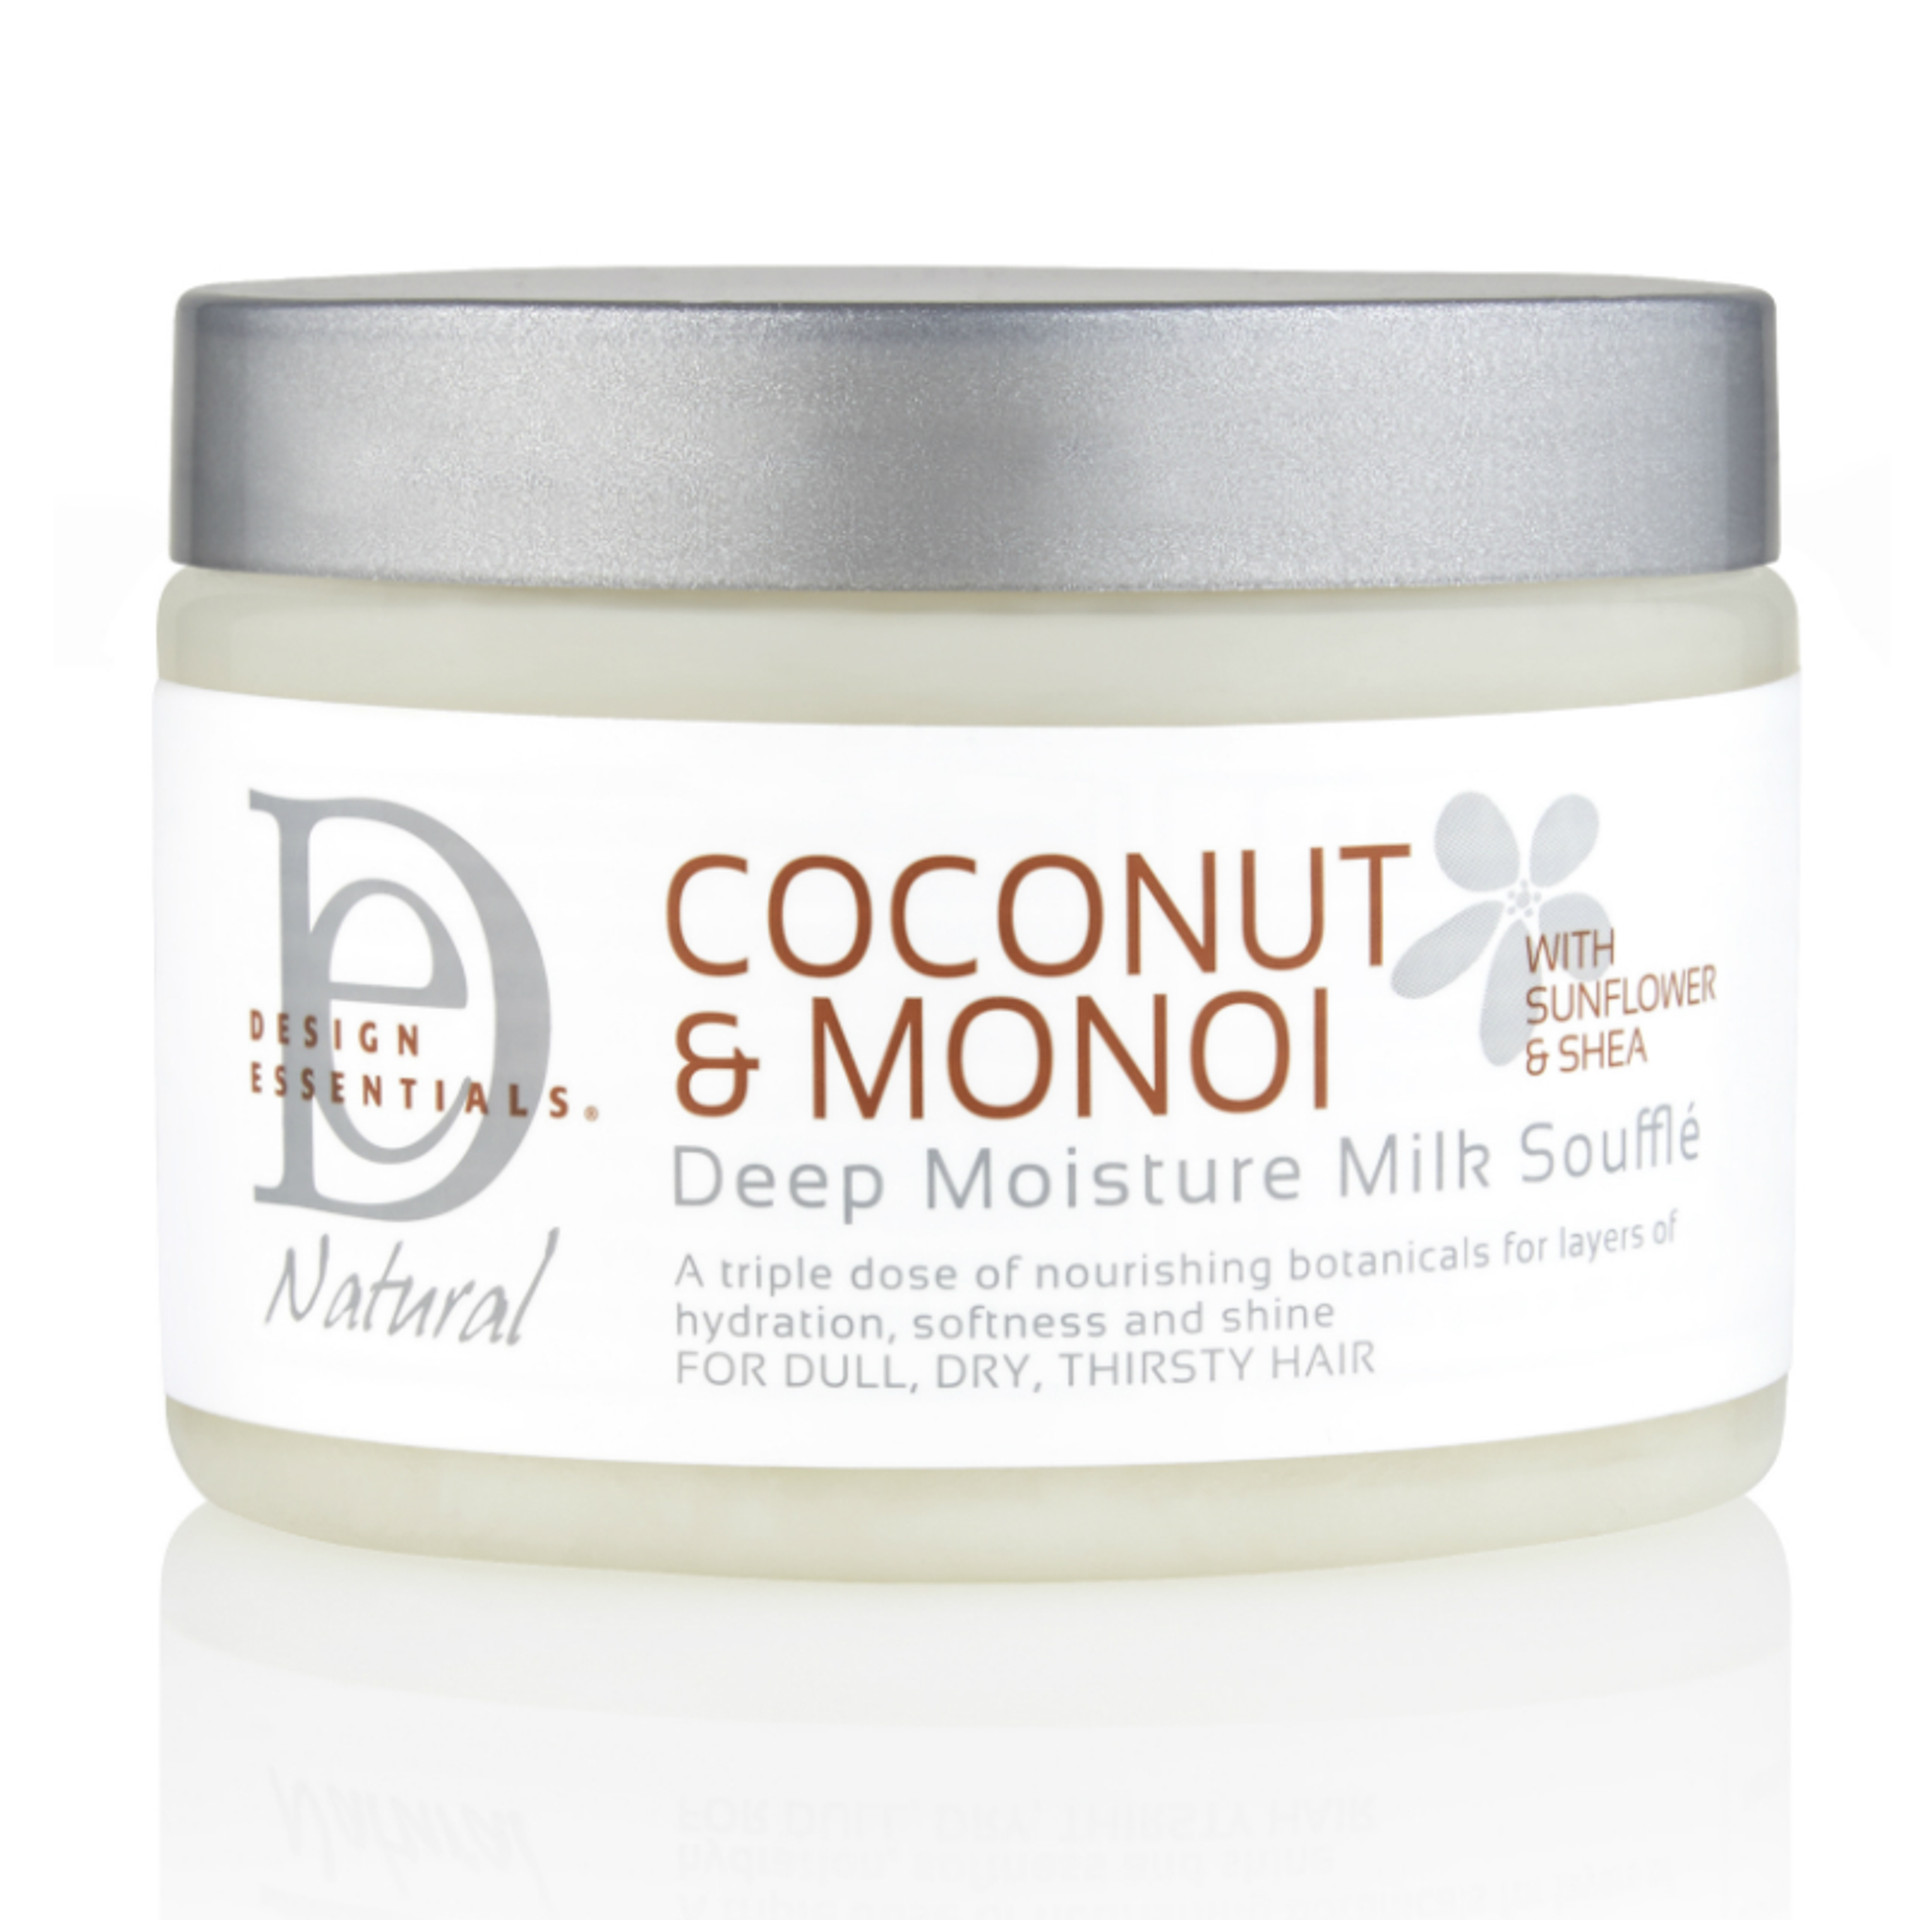 Design Essentials Natural Coconut And Monoi Deep Moisture Milk Souffle 0042